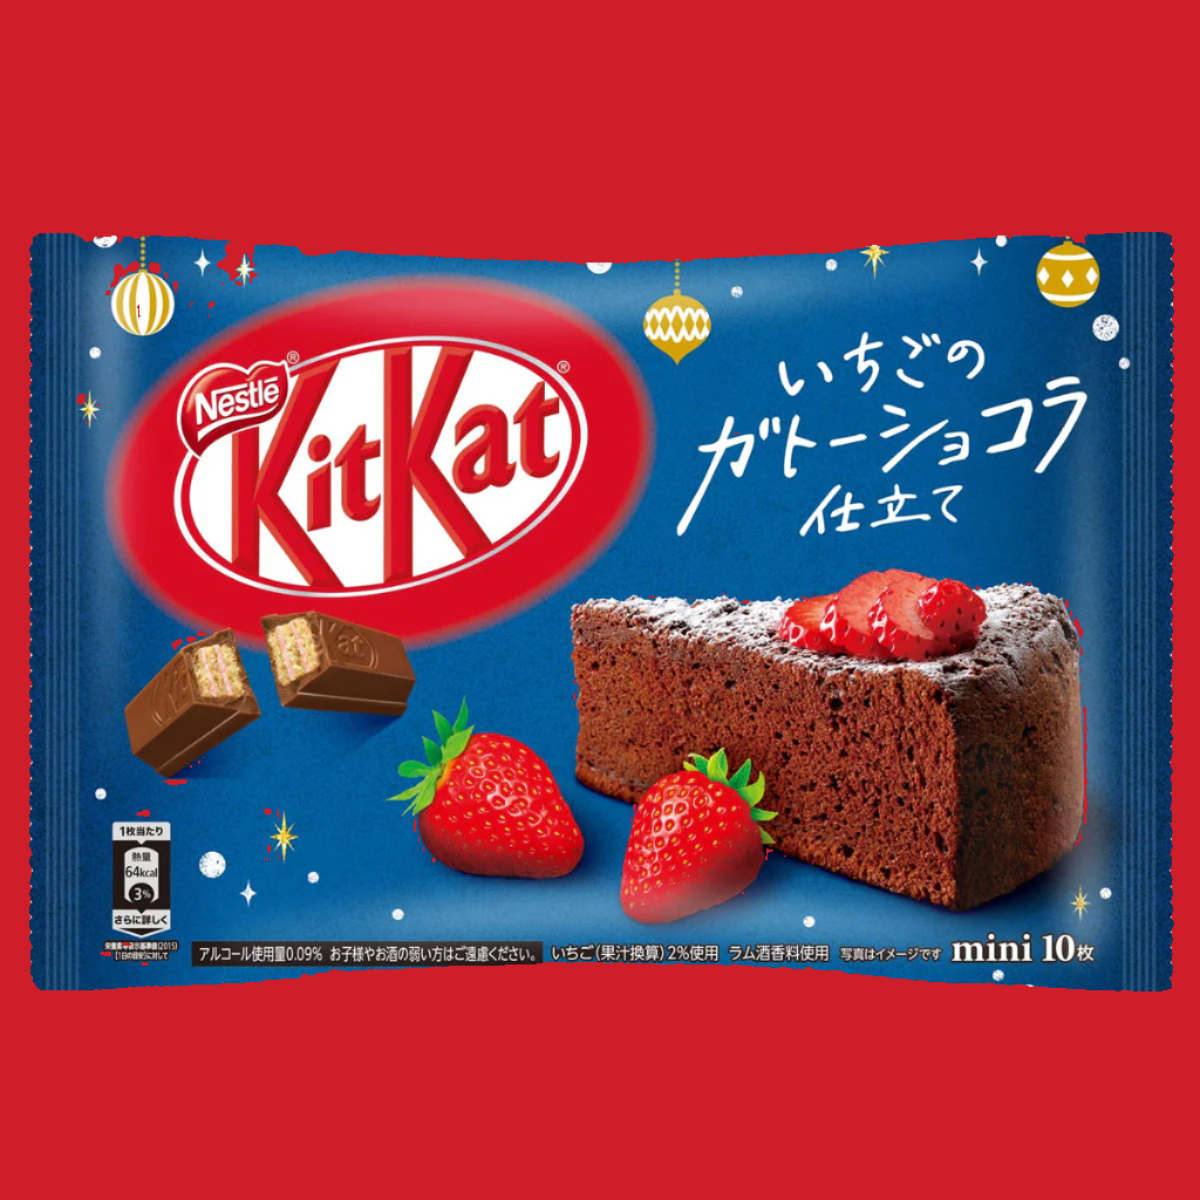 Kit Kat Strawberry Chocolate Cake Wafer (Japan)